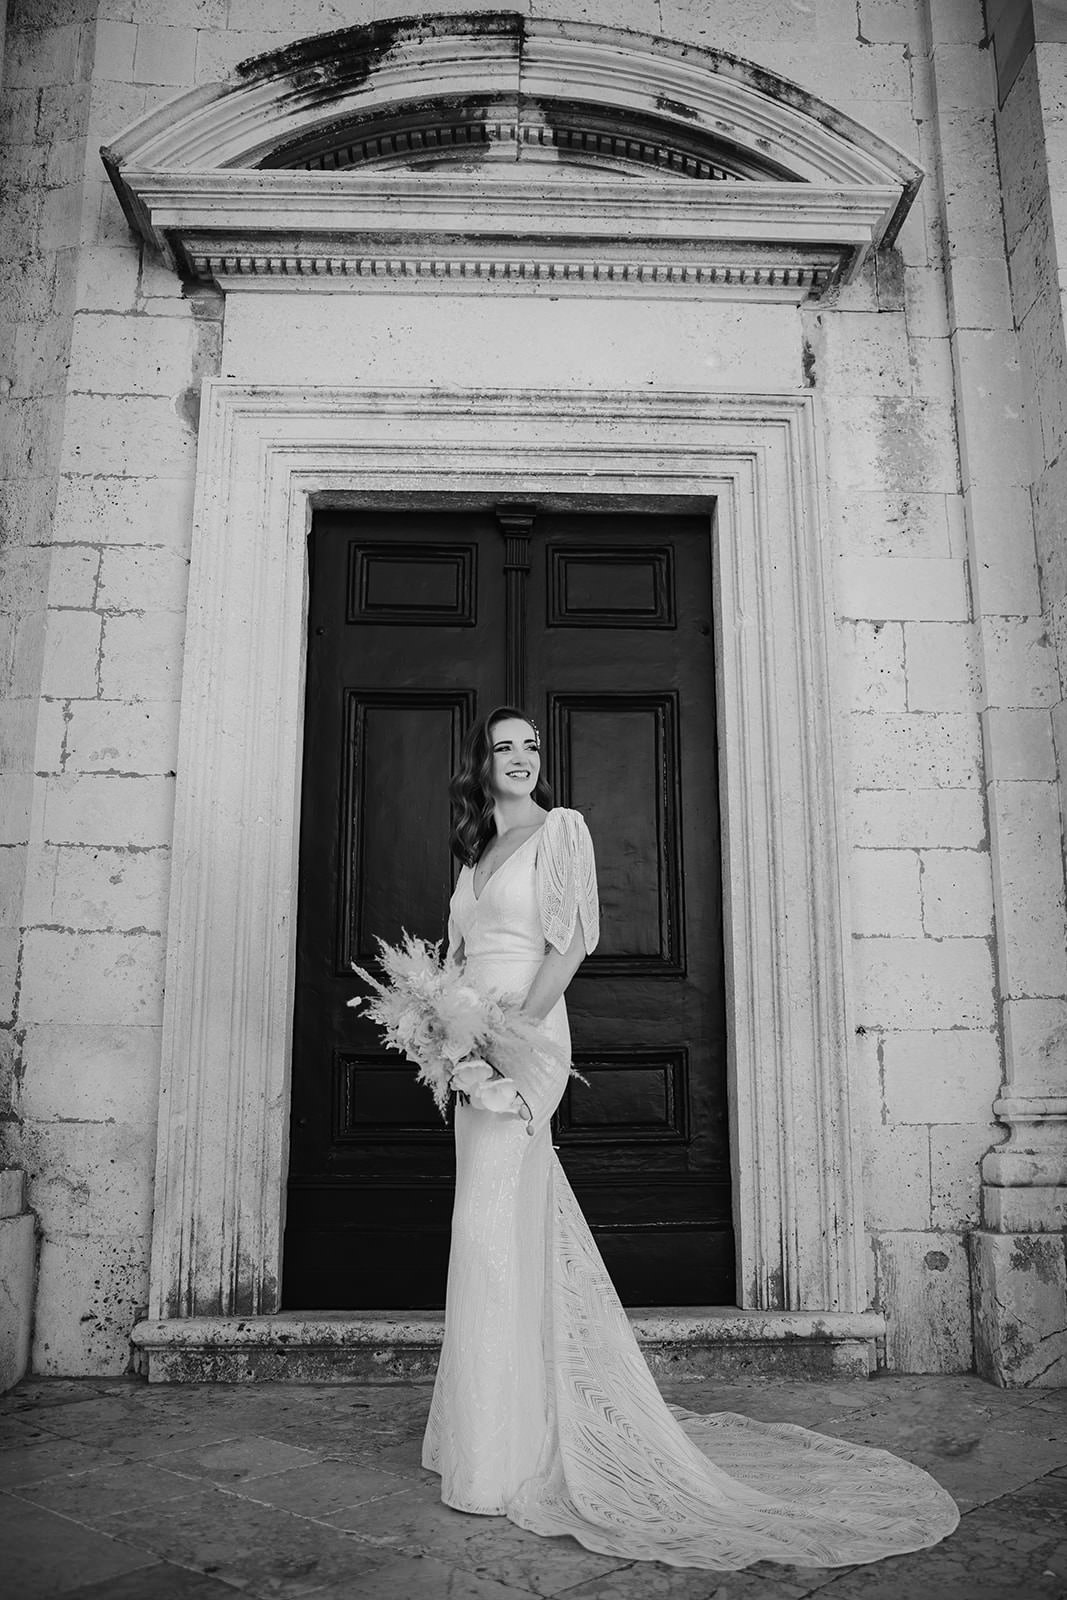 Sponza Palace Wedding Villa Rose Nicola Darren 22 | Croatia Elopement Photographer and Videographer